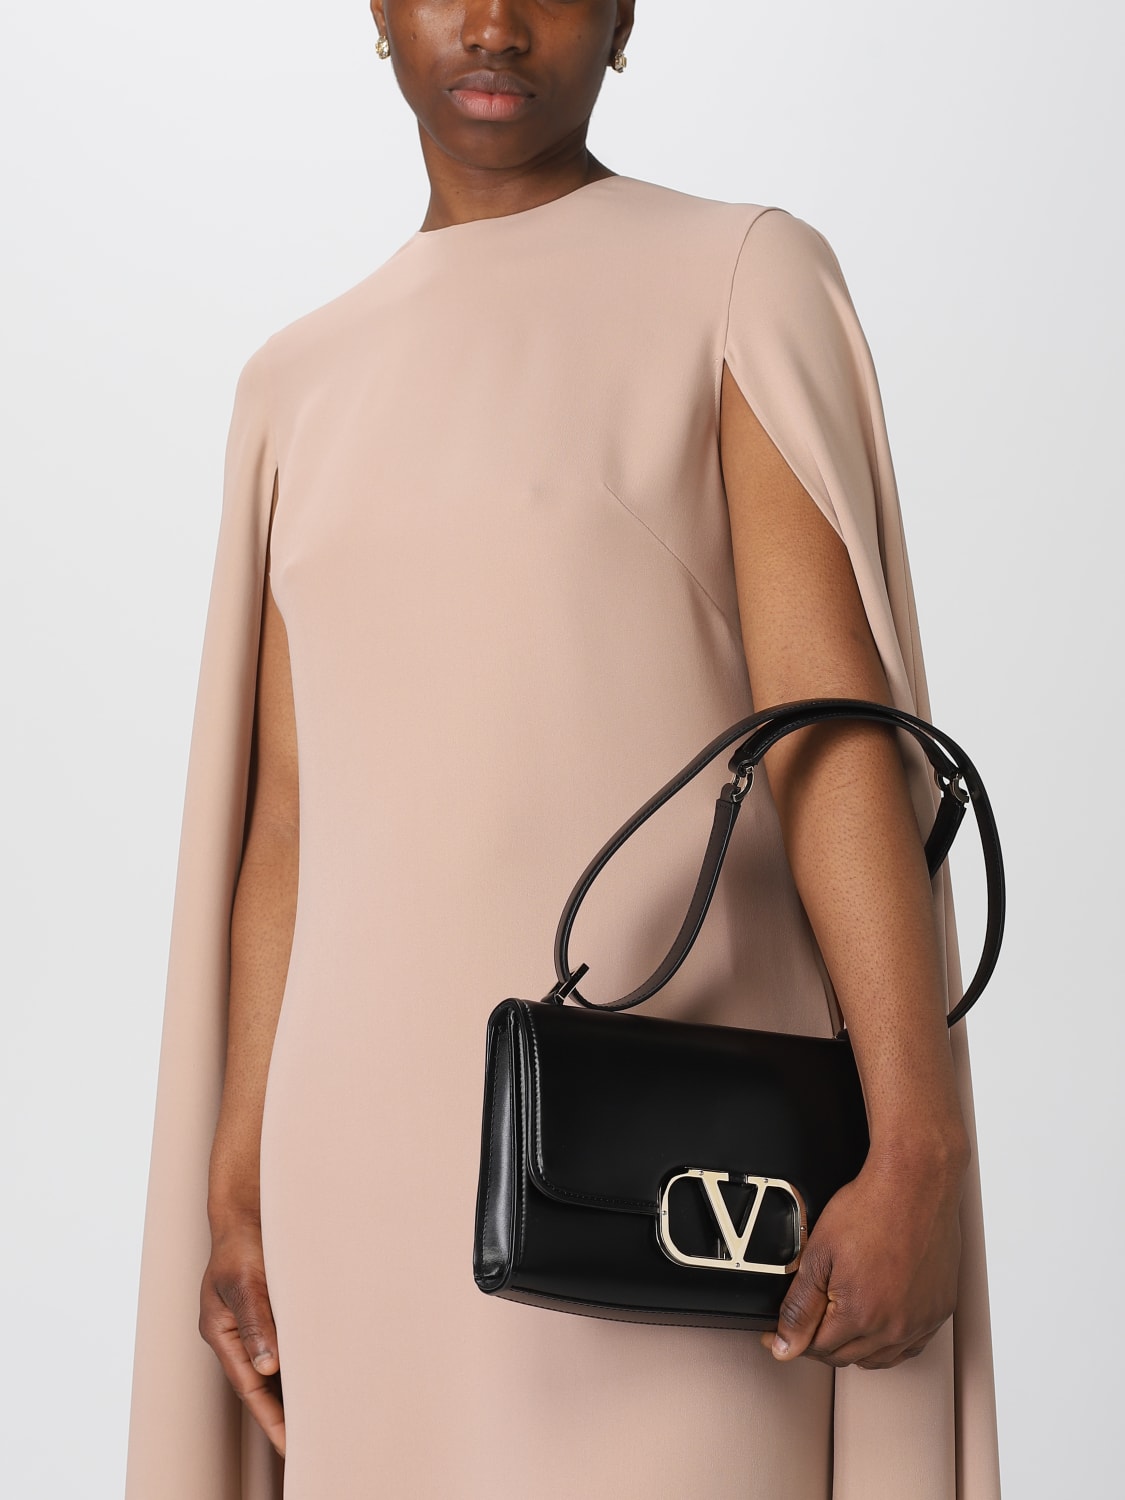 VALENTINO GARAVANI: VLogo Type in leather - Black | Valentino Garavani shoulder bag 2W2B0L49MUS online GIGLIO.COM